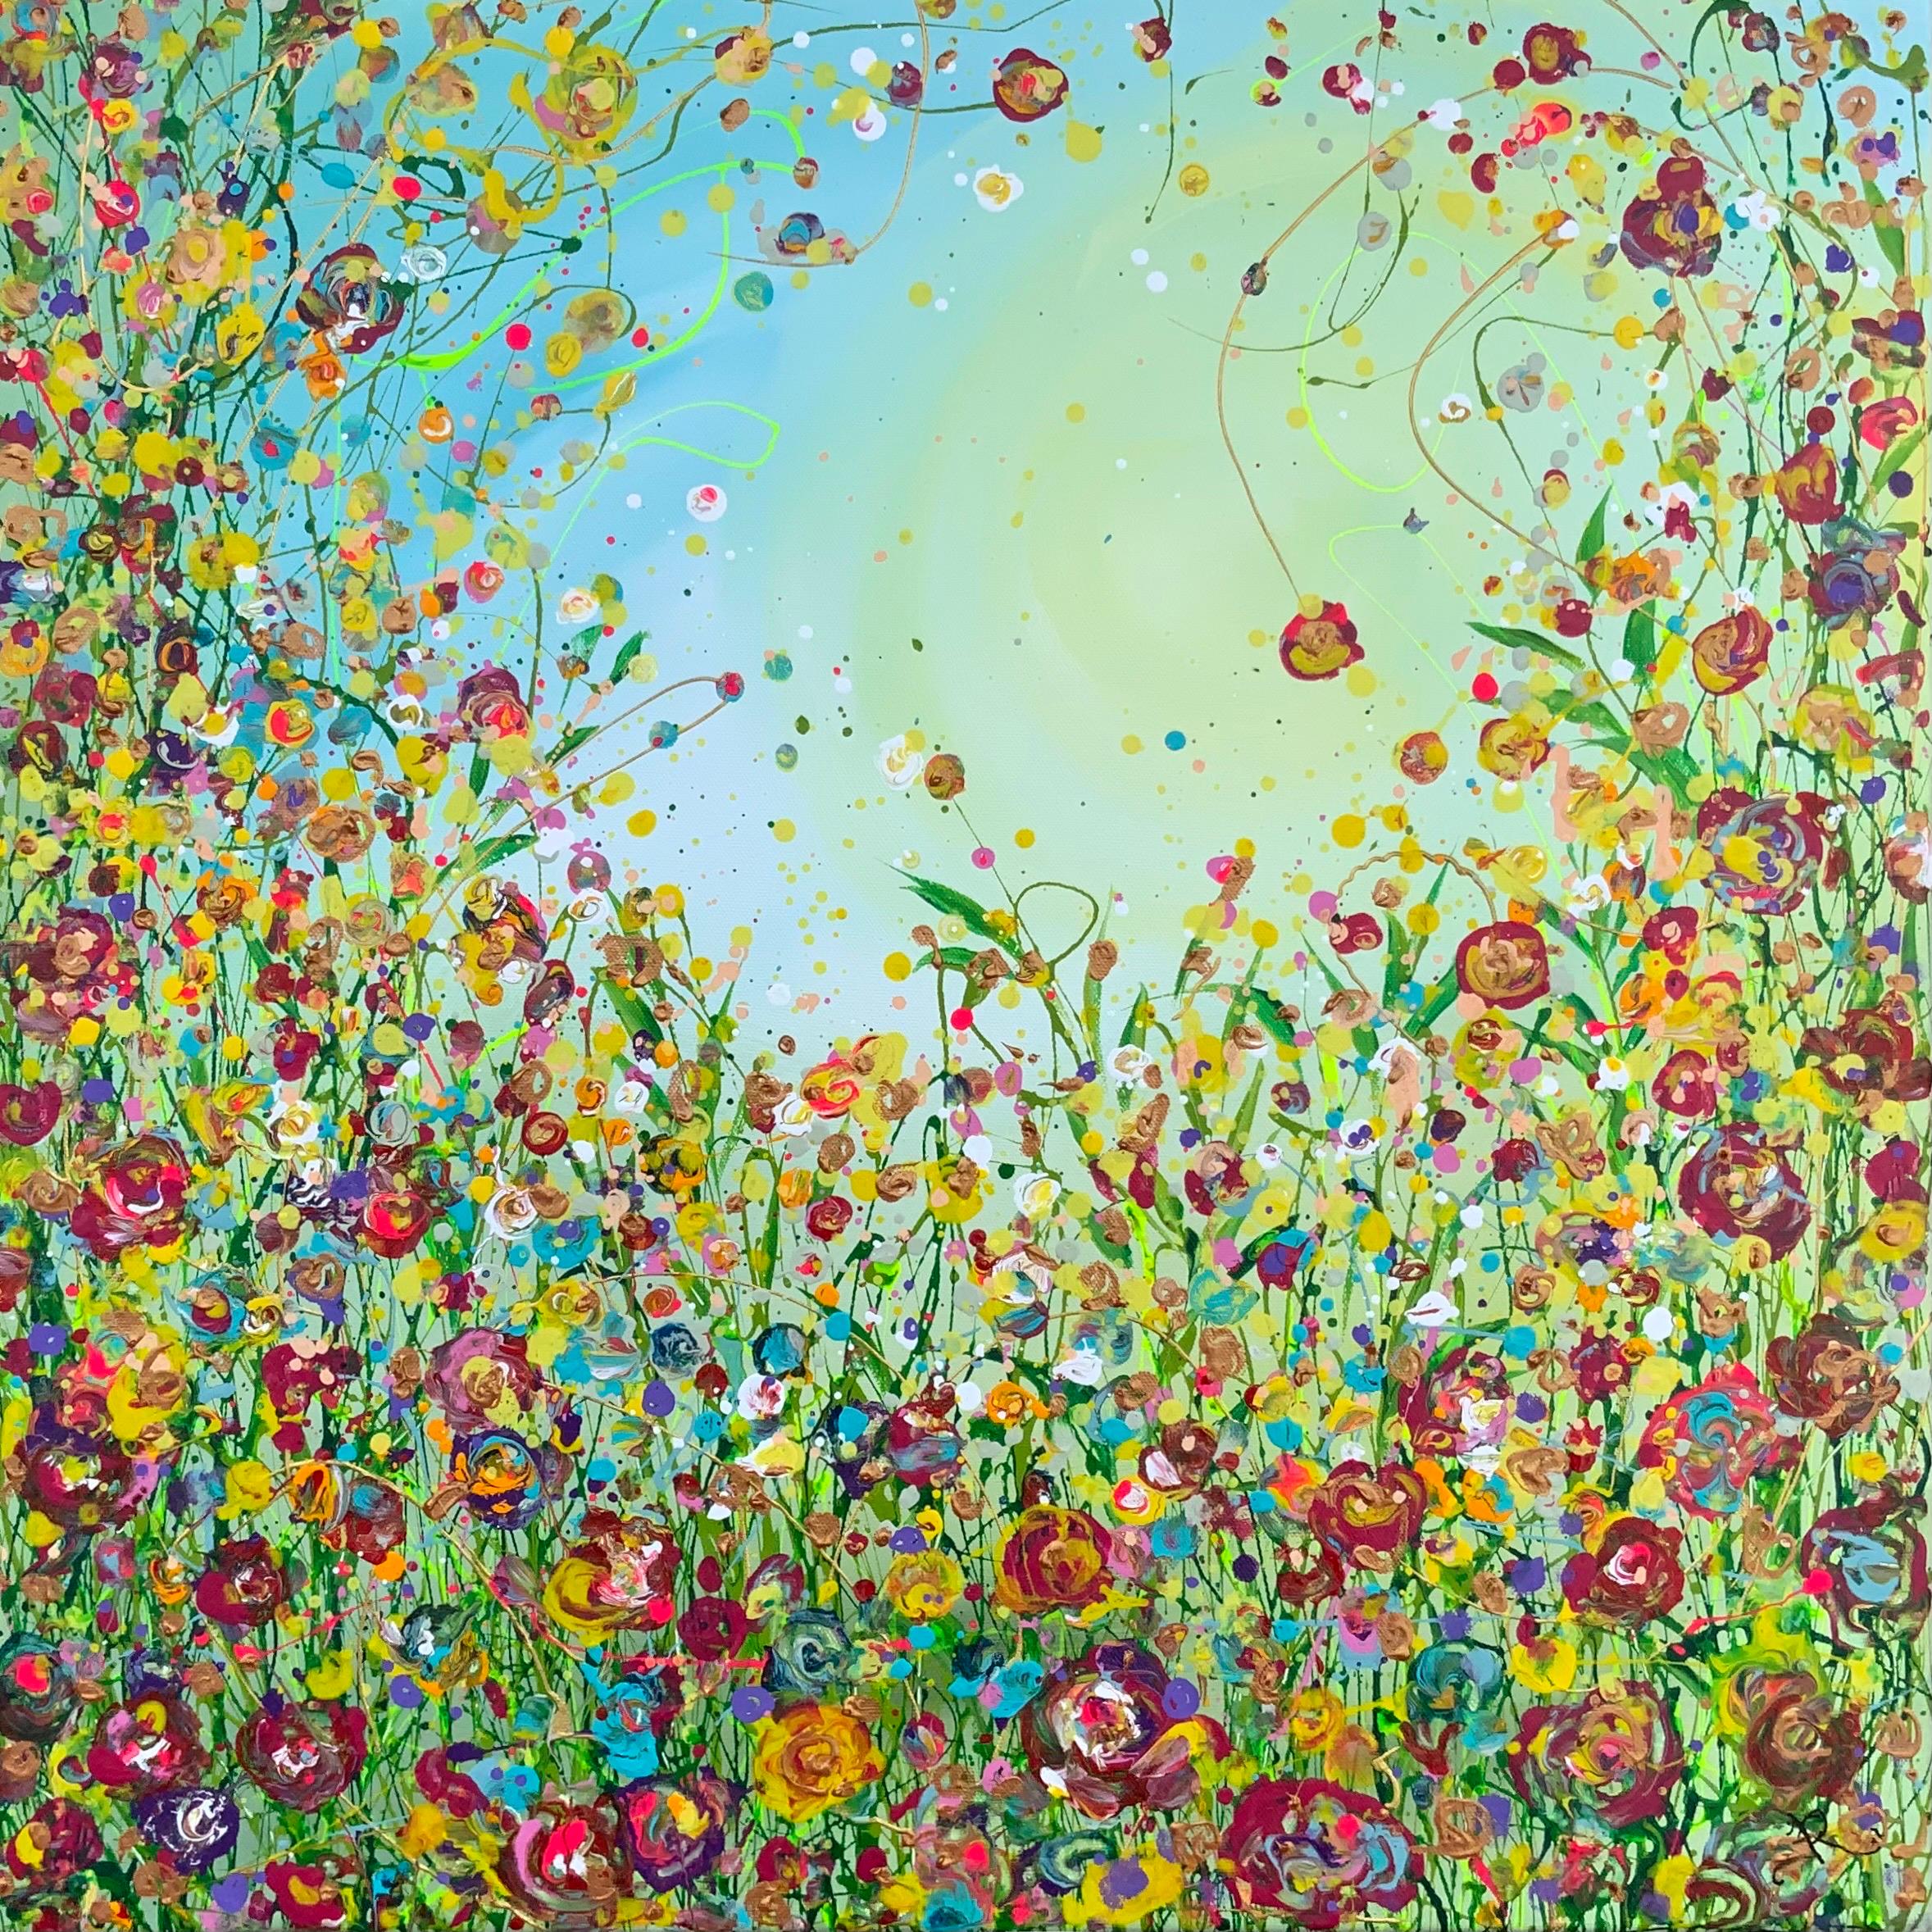 Abstract Painting Jan Rogers - « A Flurry of Wild Flora », art floral, art des prairies, art abordable, art original